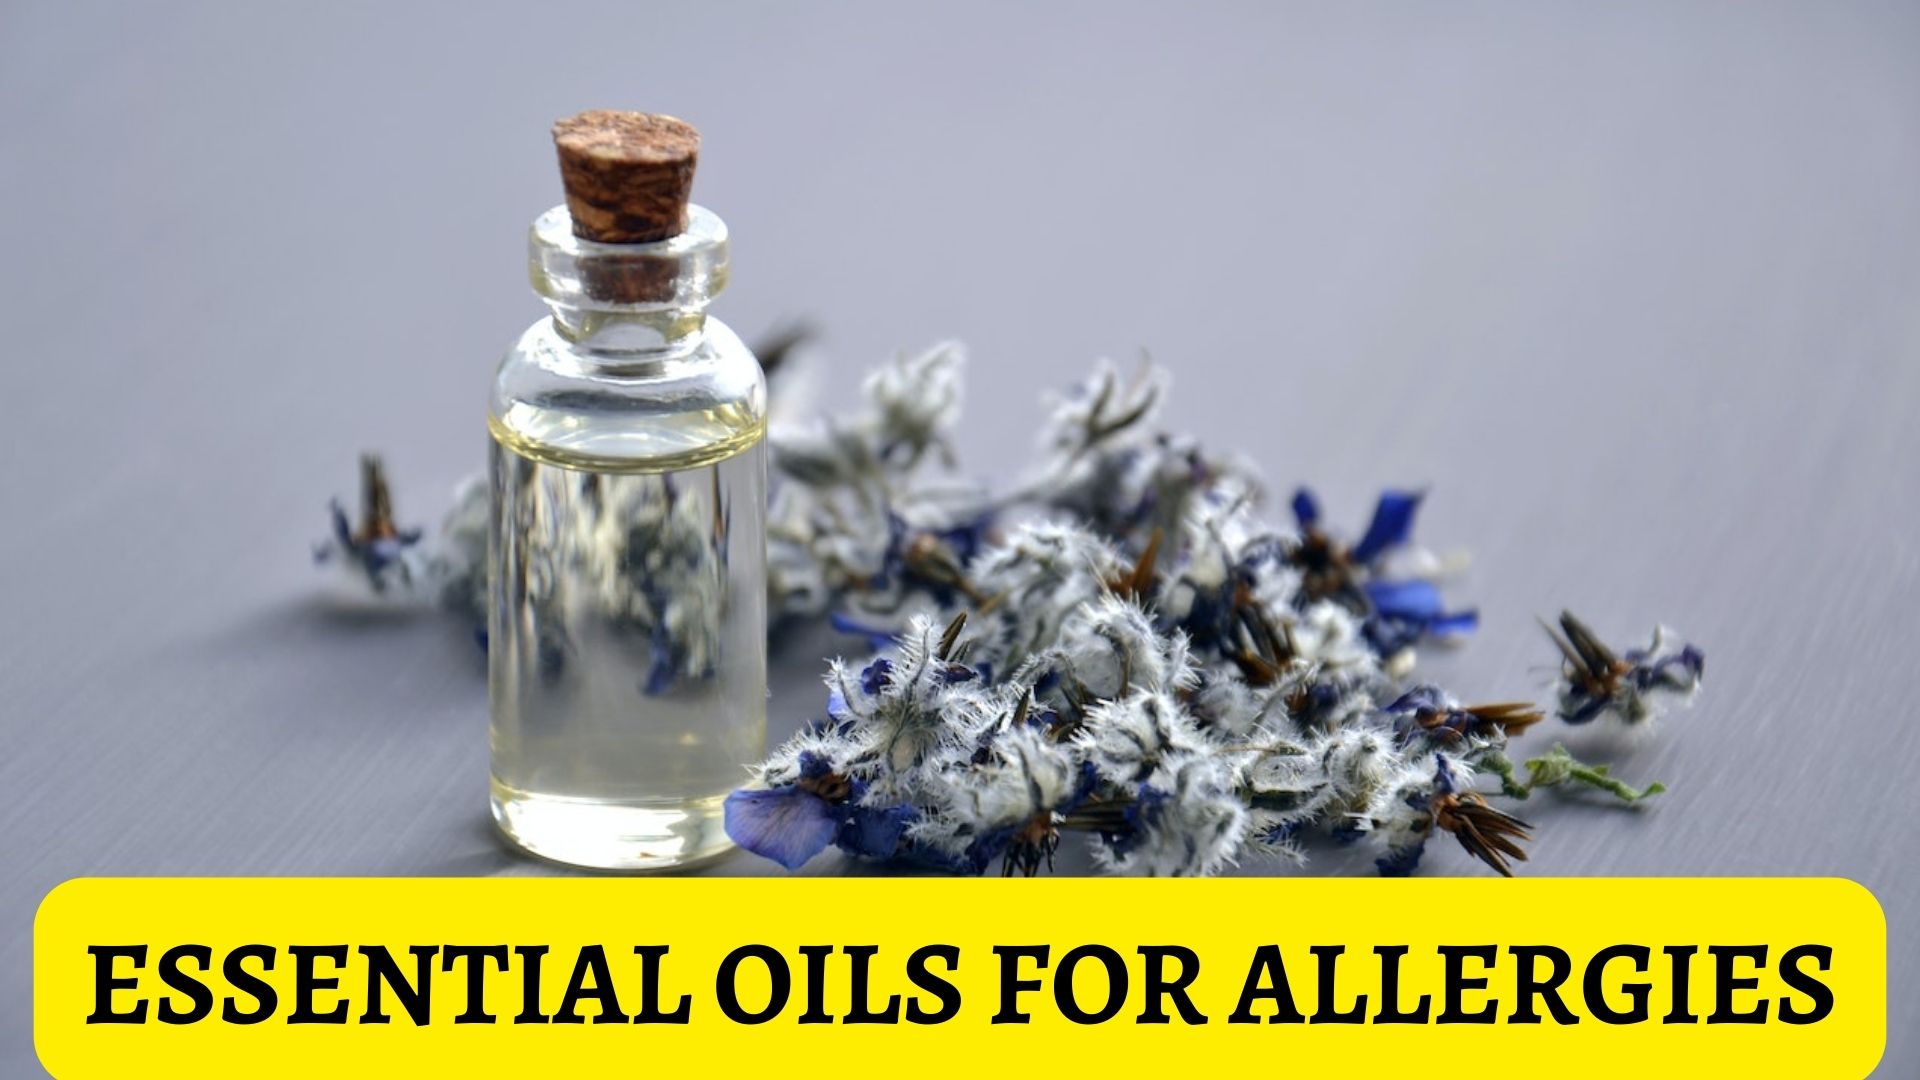 Essential Oils For Allergies - Help With Seasonal Allergy Symptoms